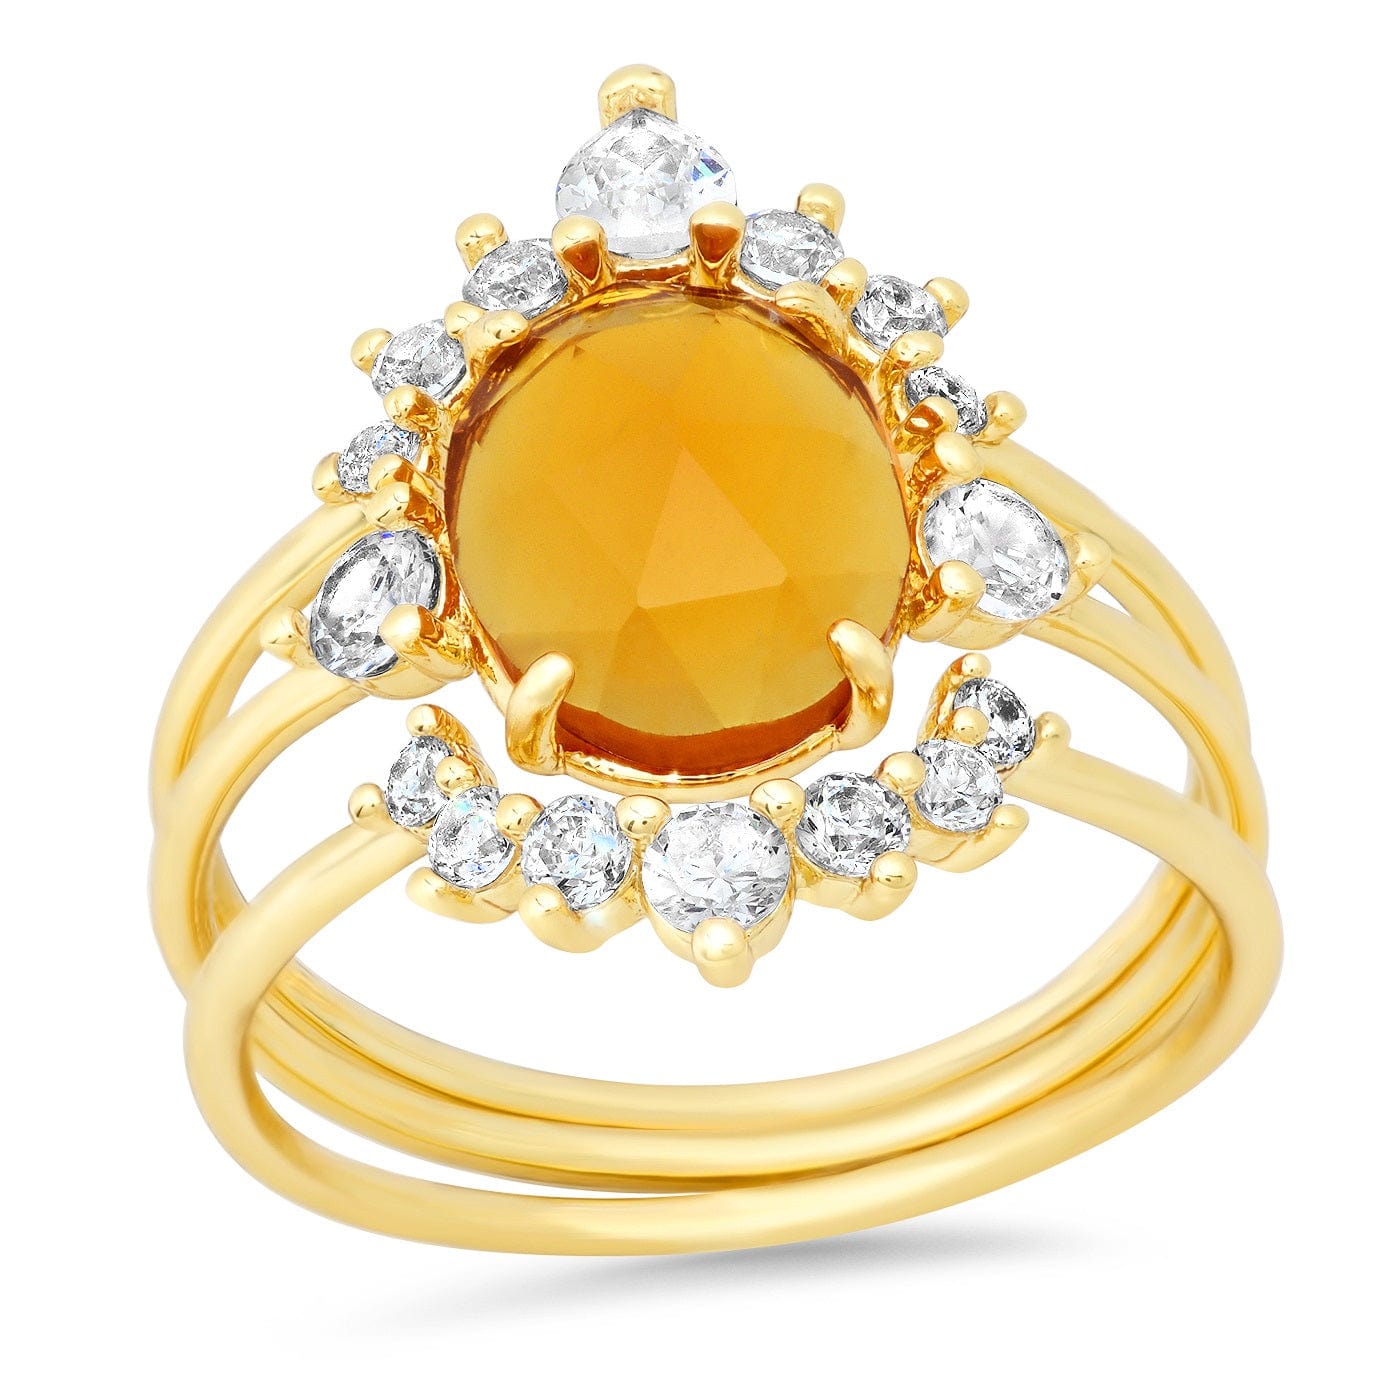 TAI JEWELRY Rings November / 6 Three Piece Vintage Inspired Birthstone Ring